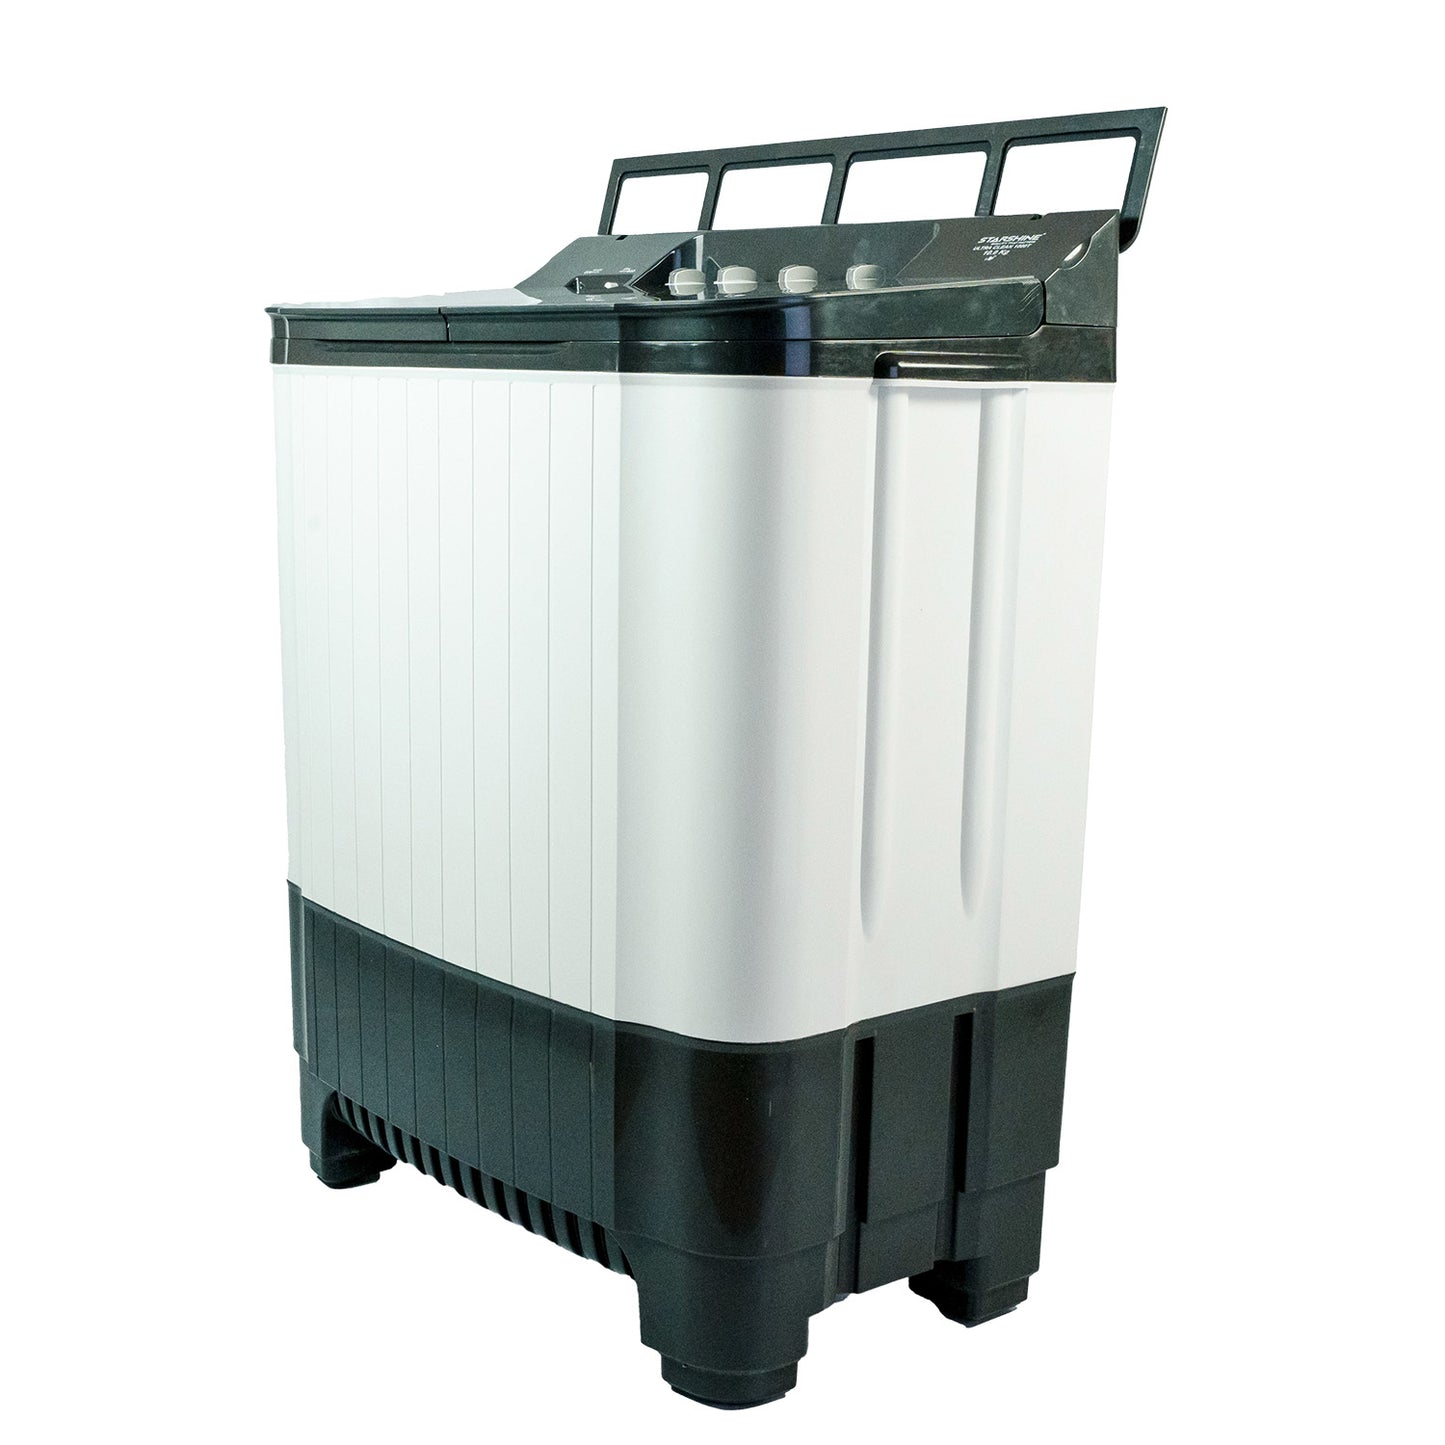 Starshine 10 Kg Semi-Automatic Top Loading Washing Machine